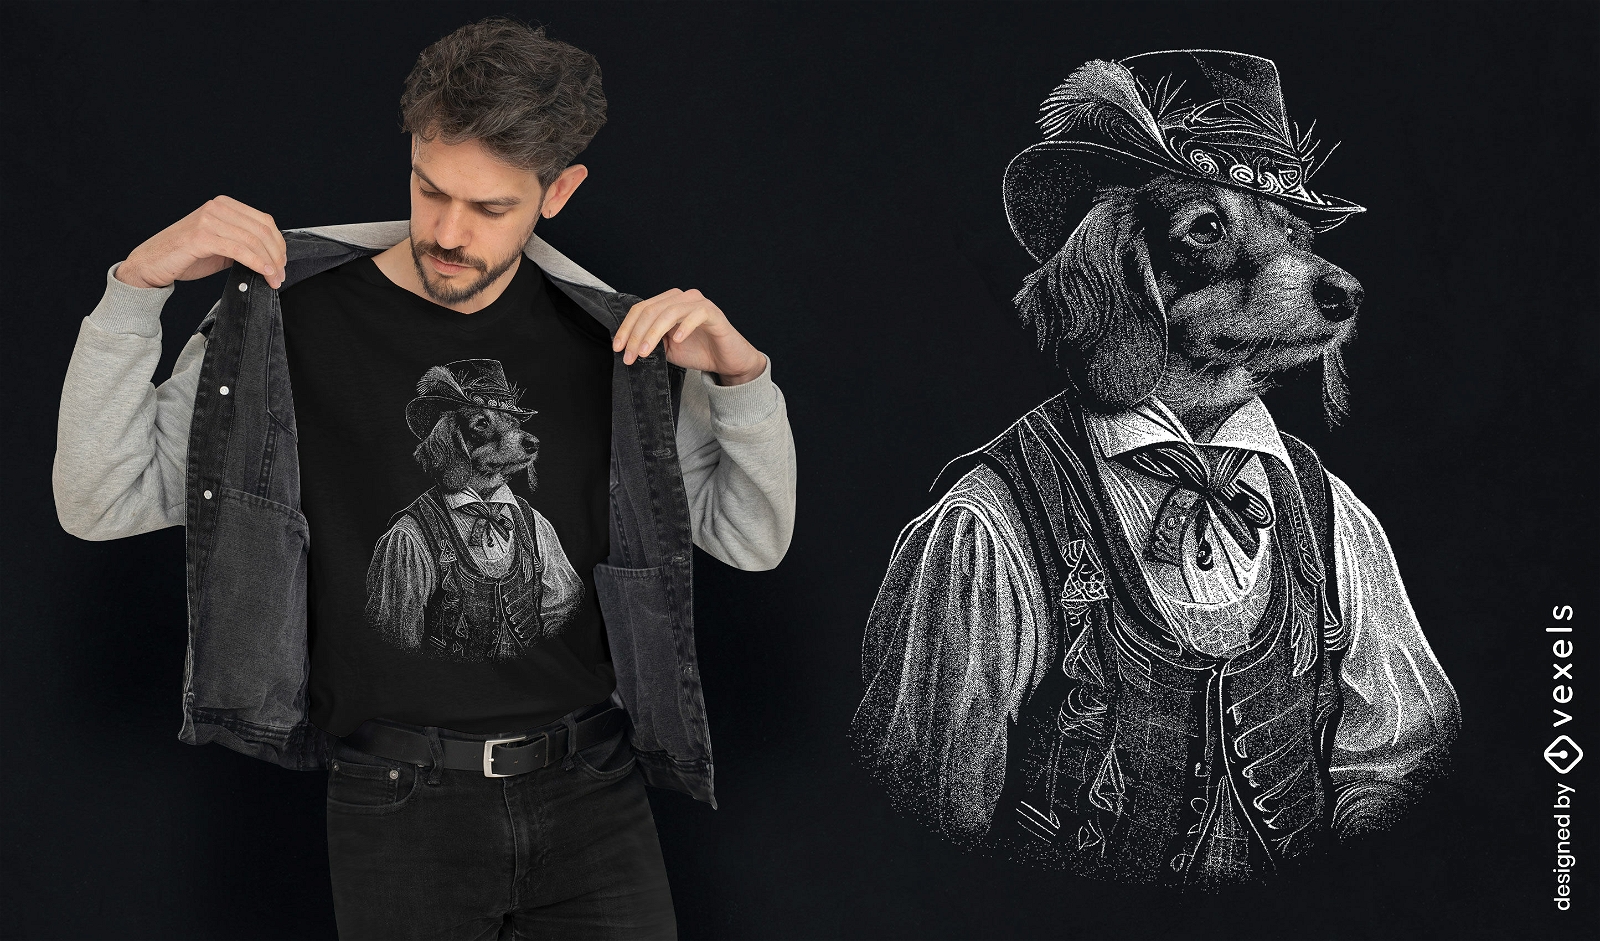 Diseño de camiseta de perro salchicha bávaro.